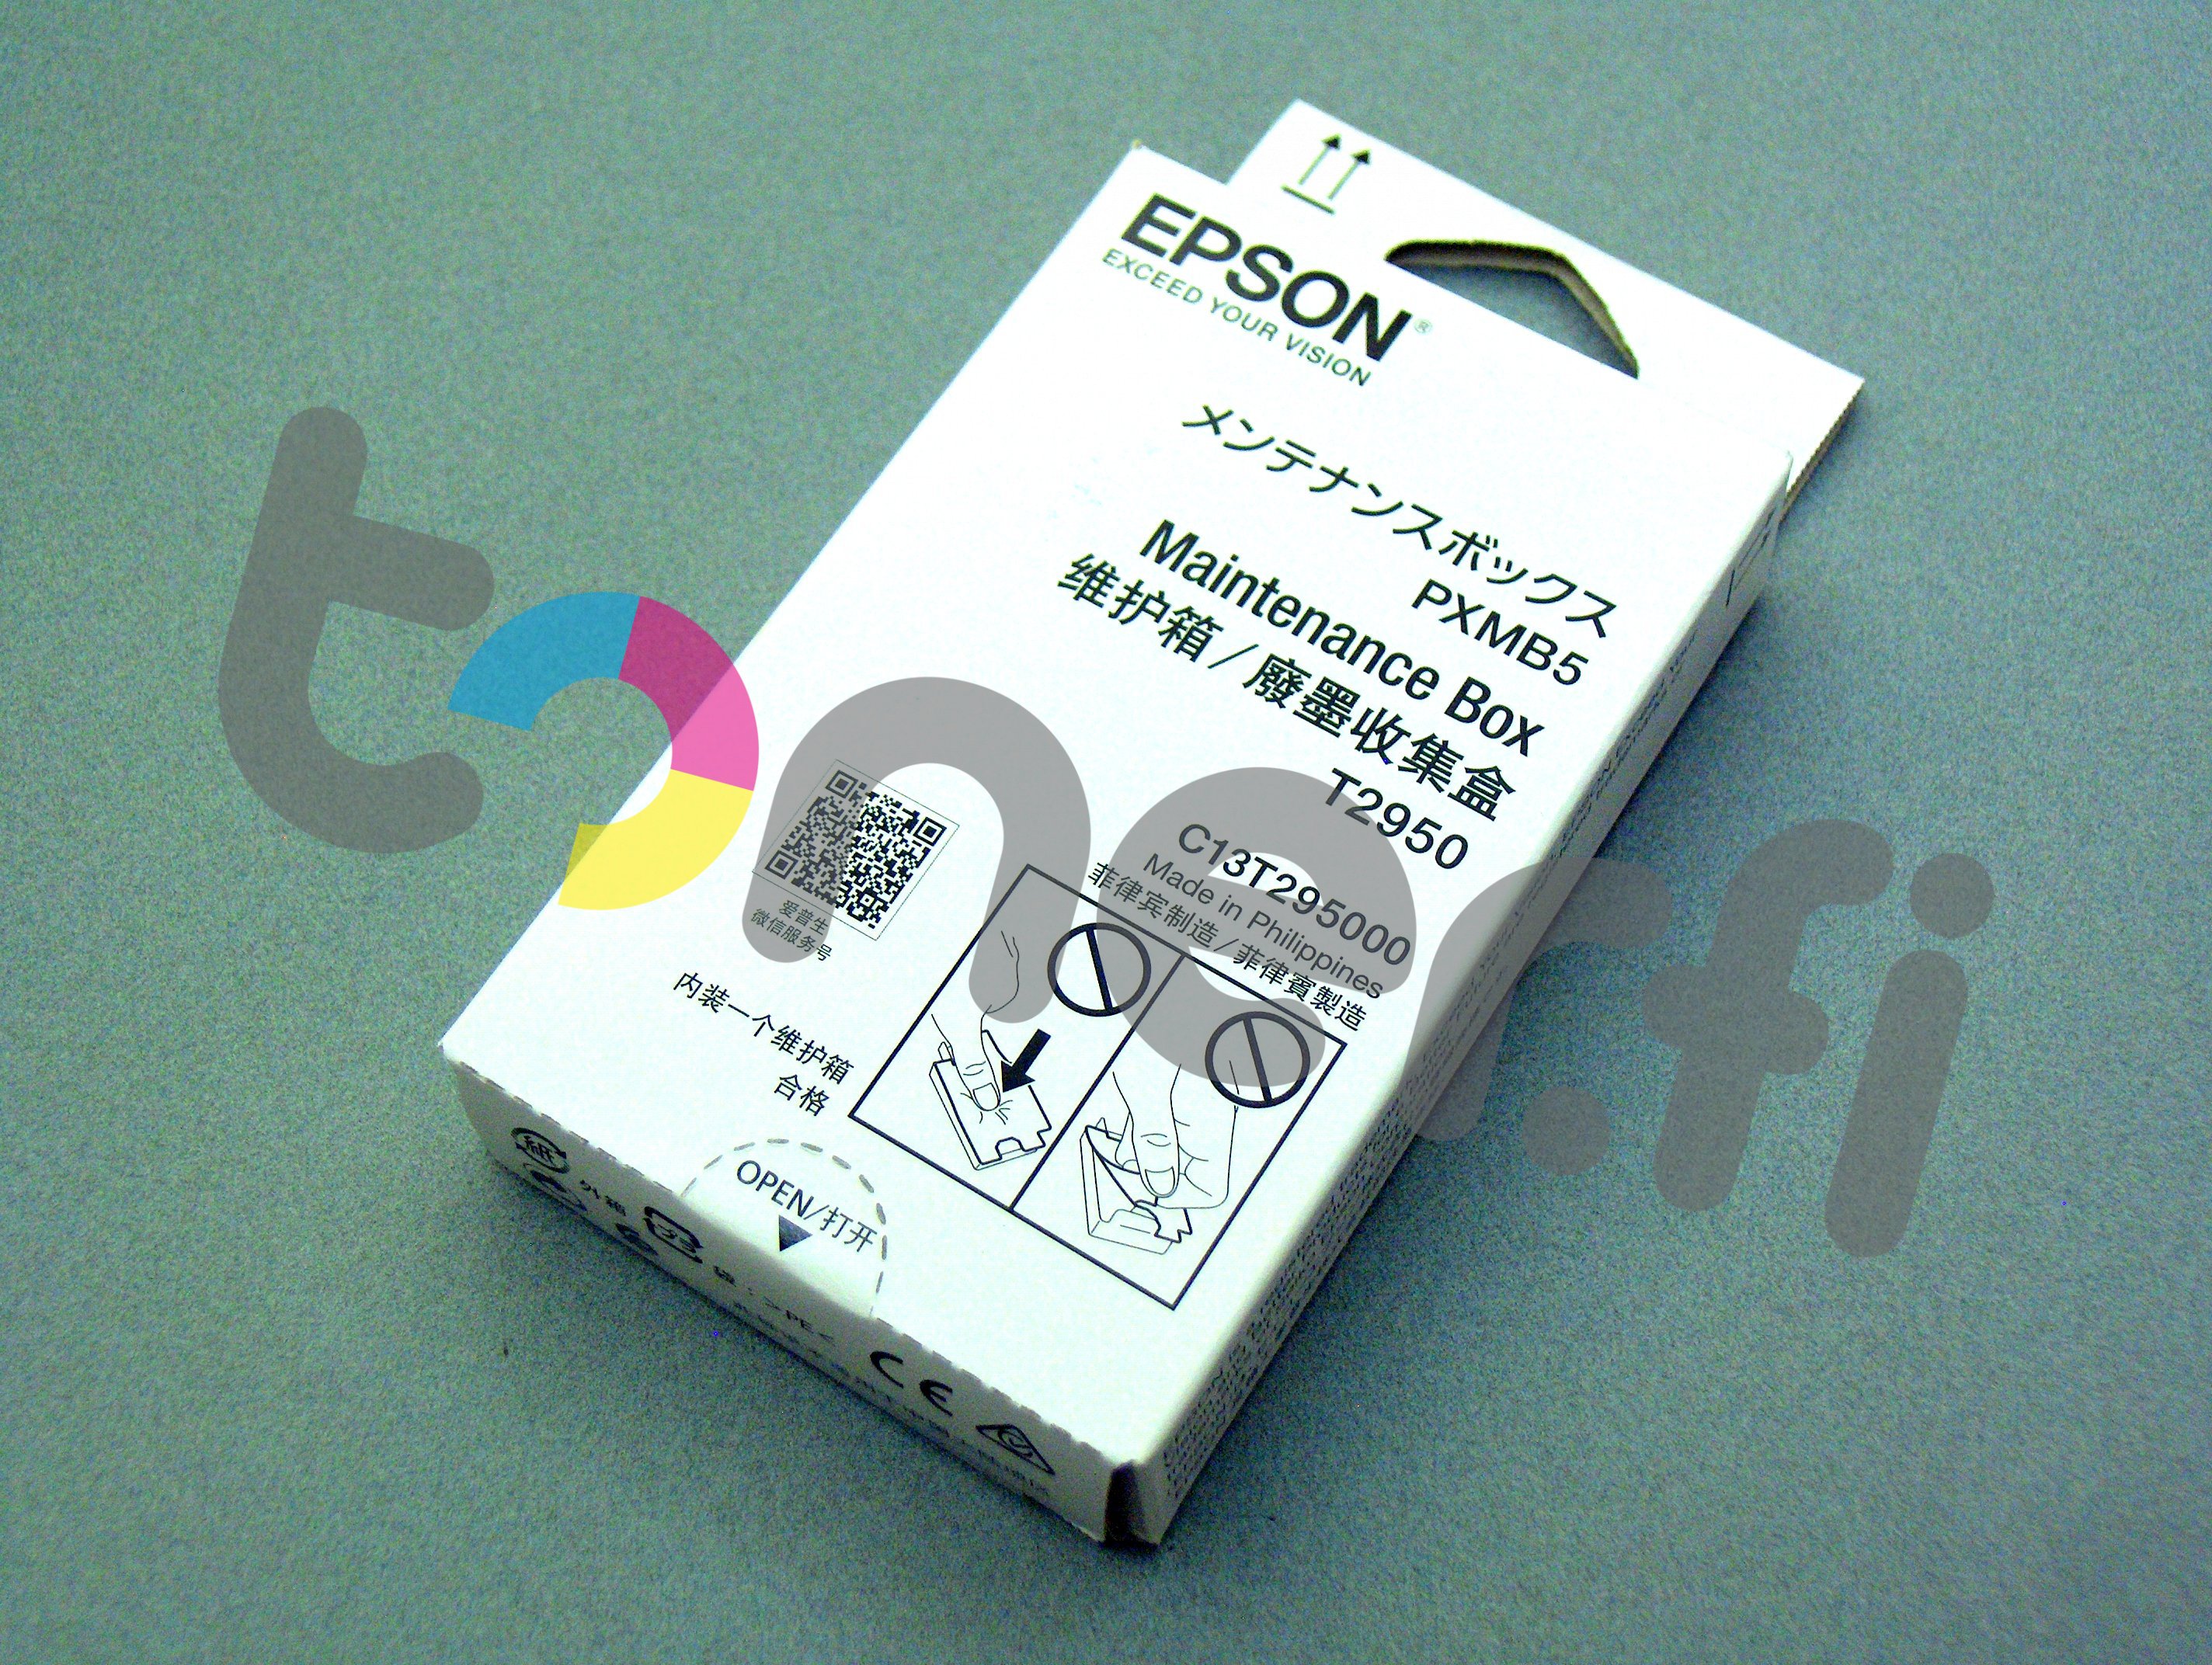 Epson C13T295000 Maintenance Box